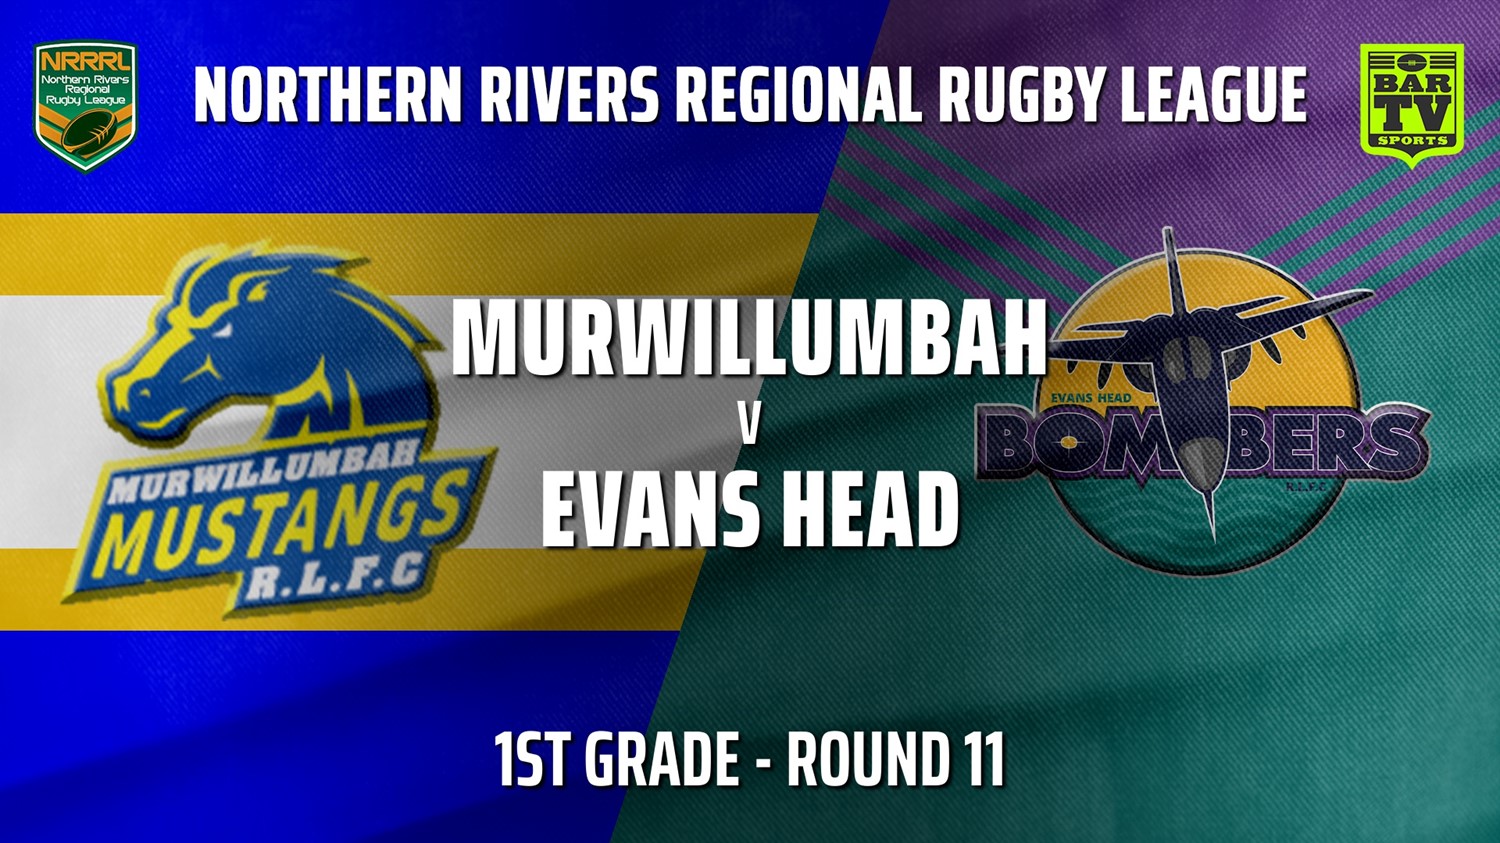 210717-Northern Rivers Round 11 - 1st Grade - Murwillumbah Mustangs v Evans Head Bombers Slate Image